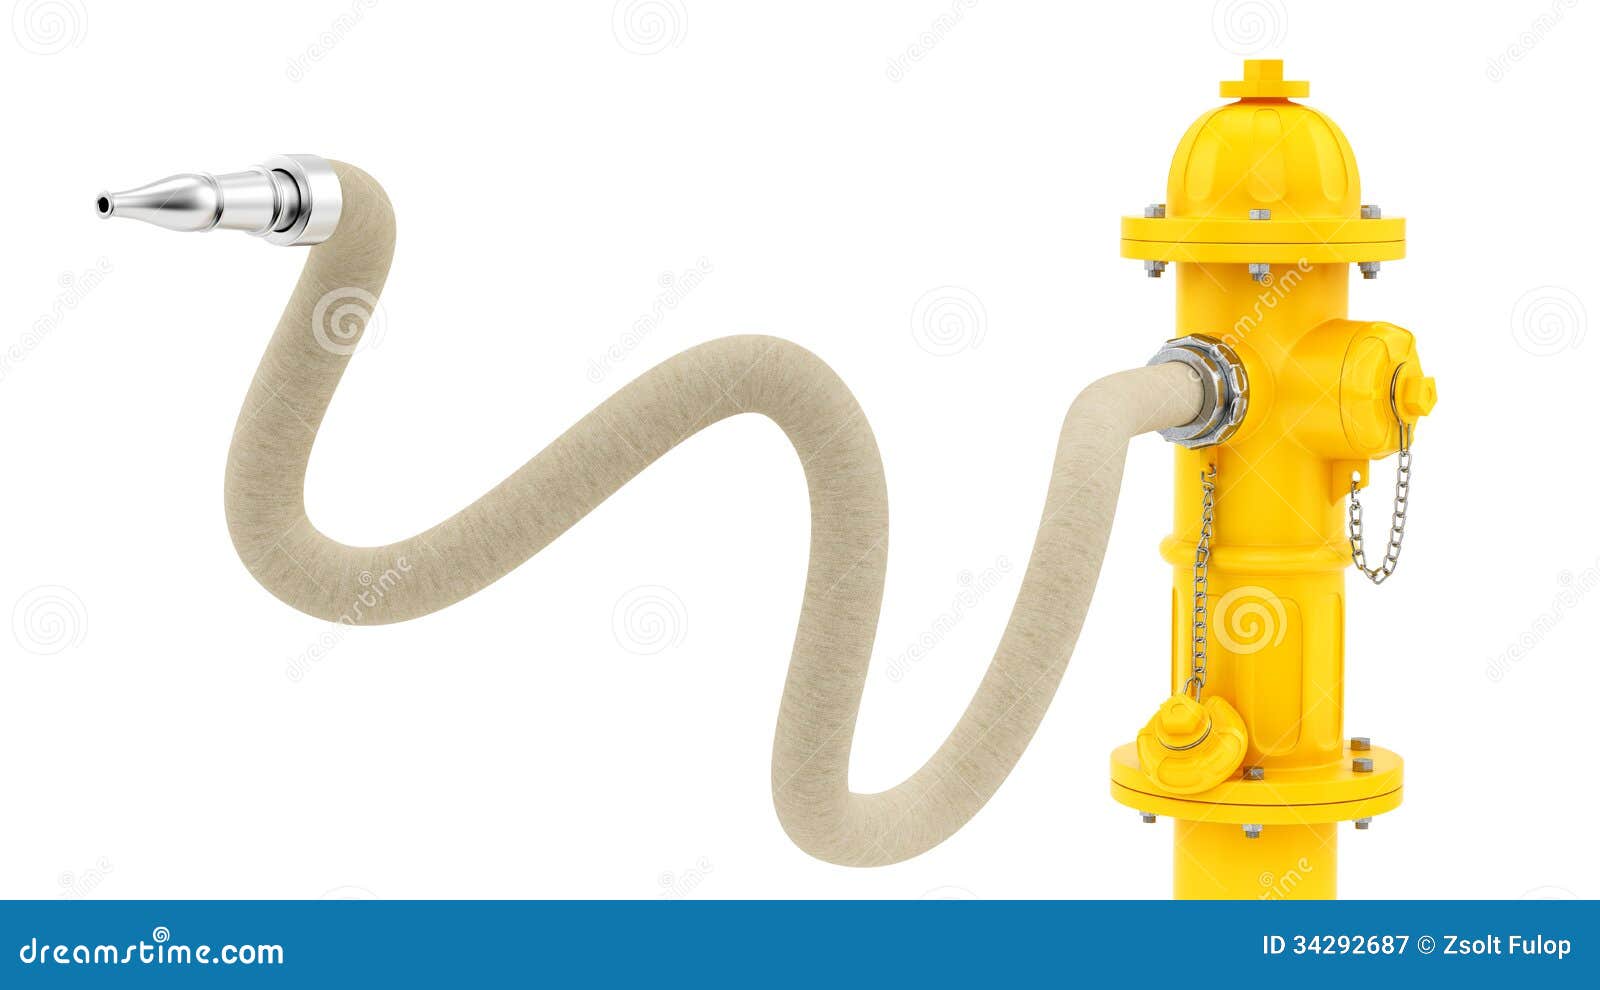 fire hose clipart - photo #8